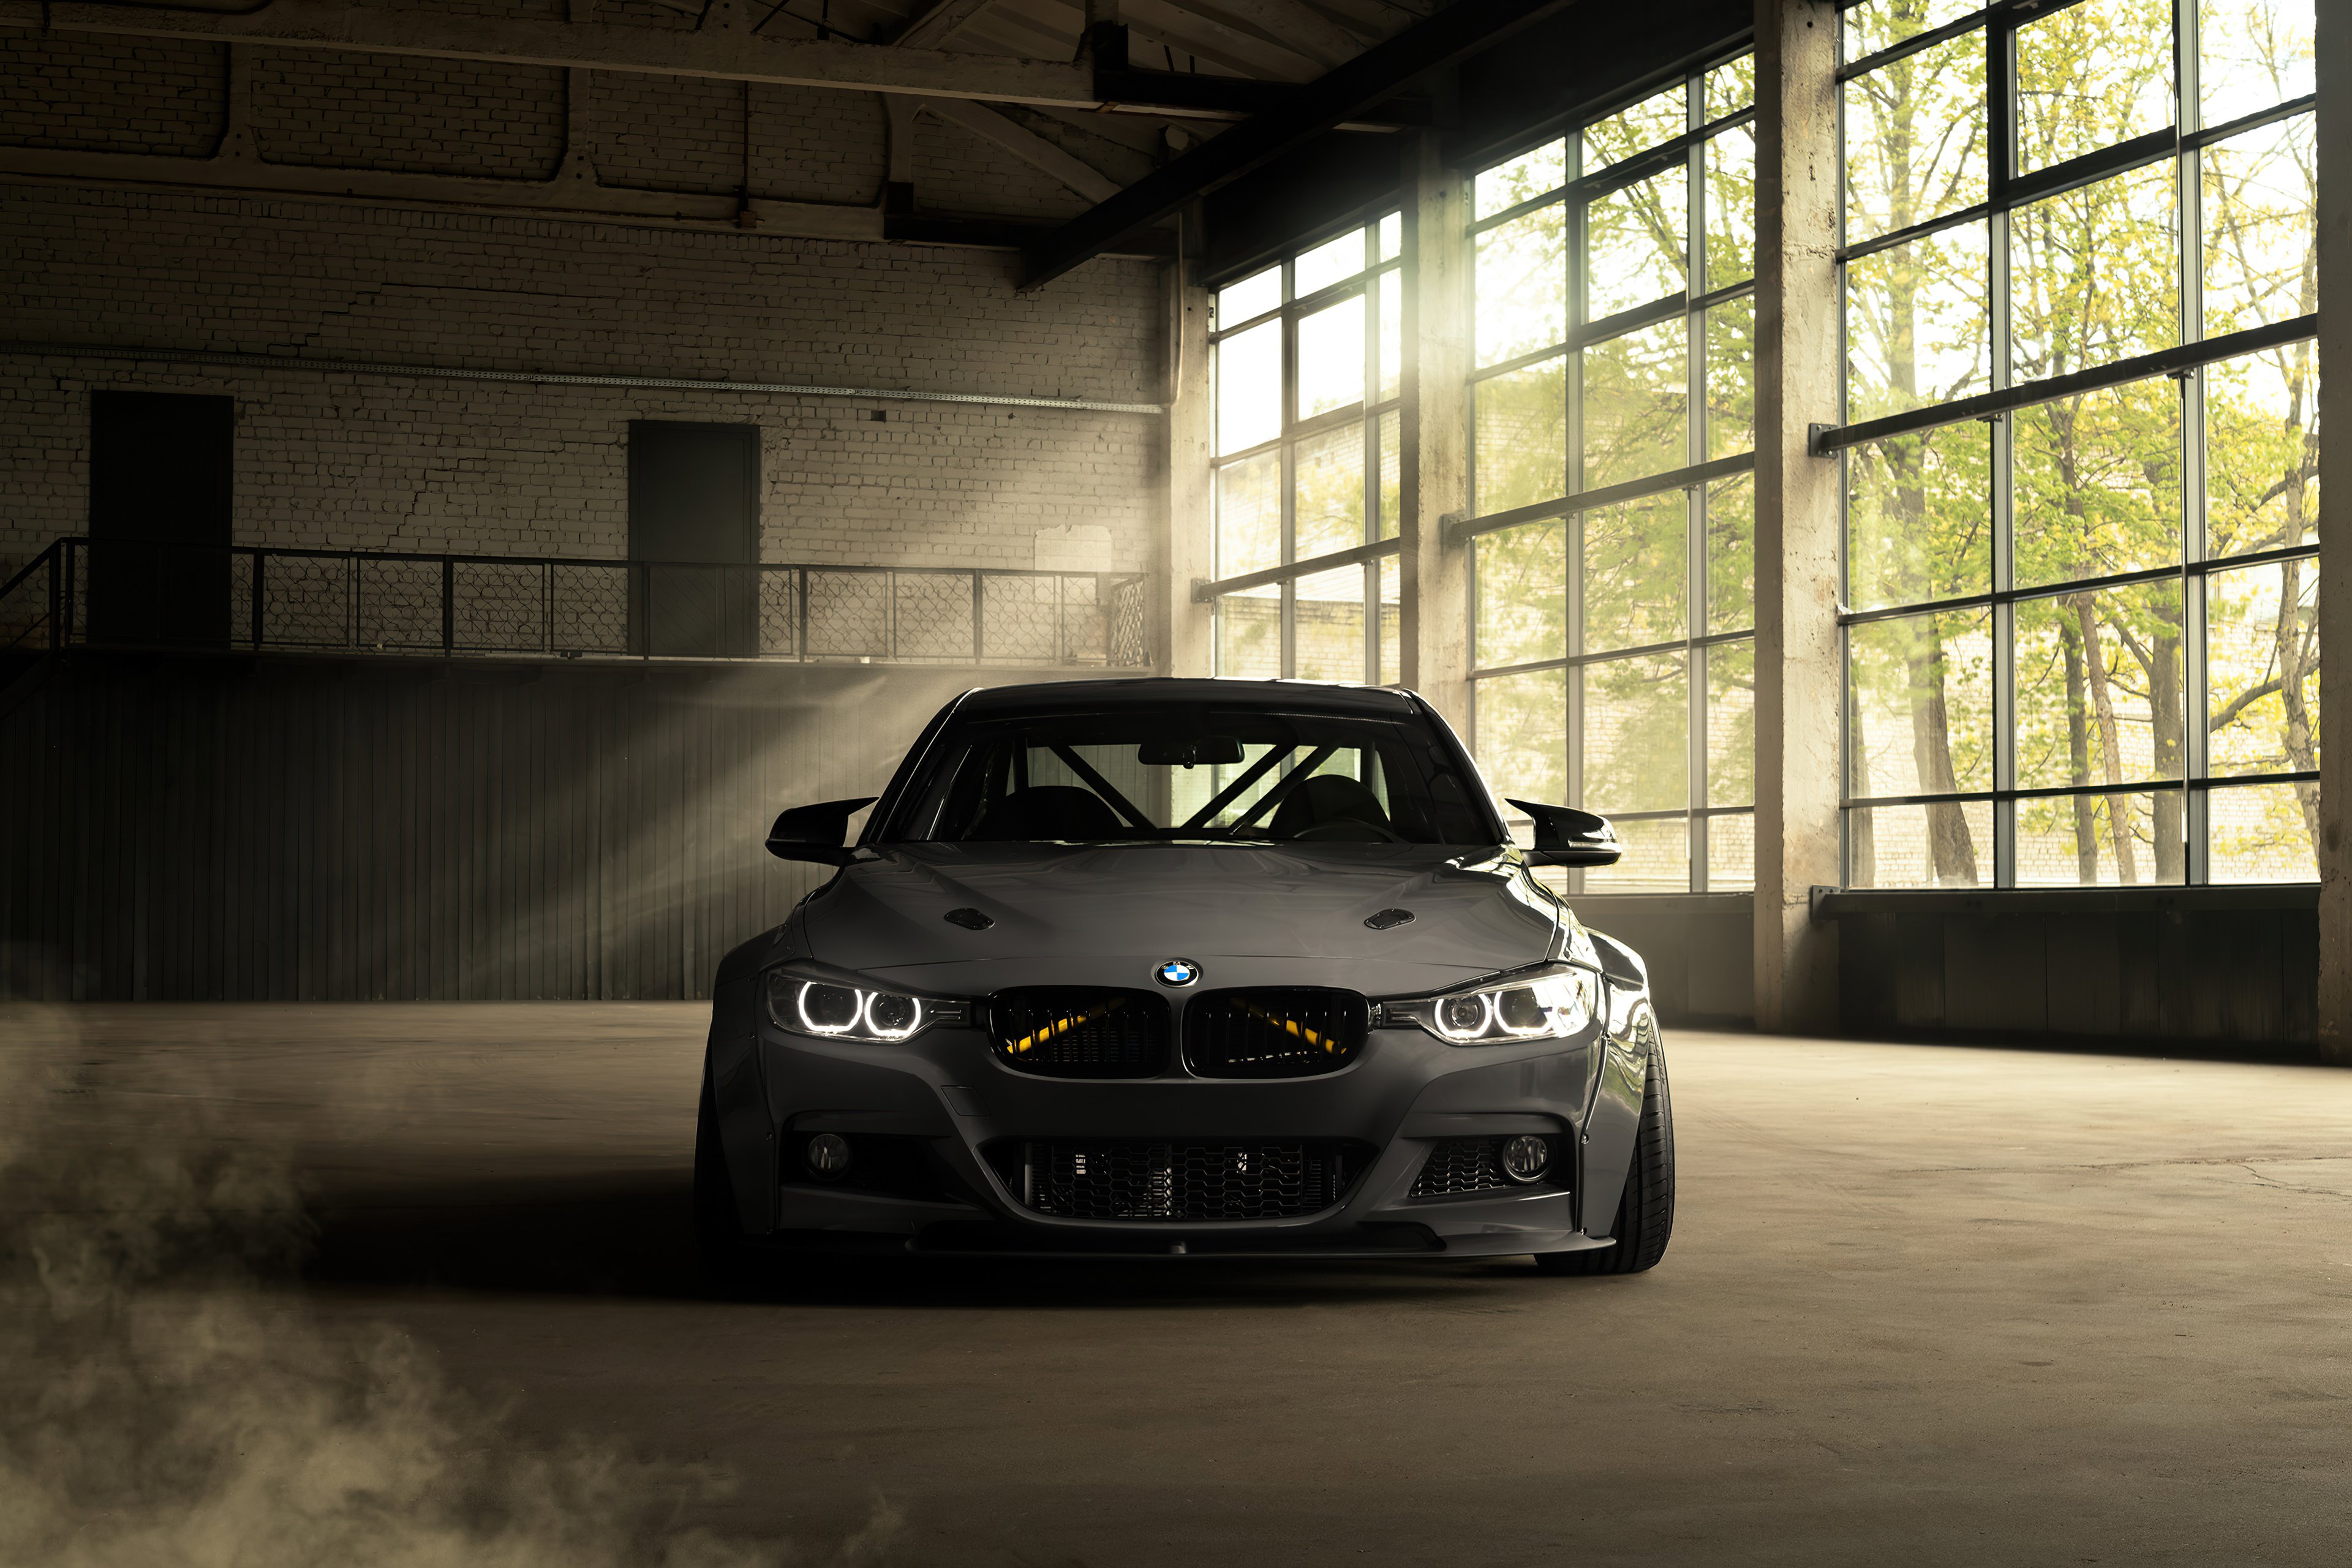 Fondos de pantalla BMW F30 widebody F30